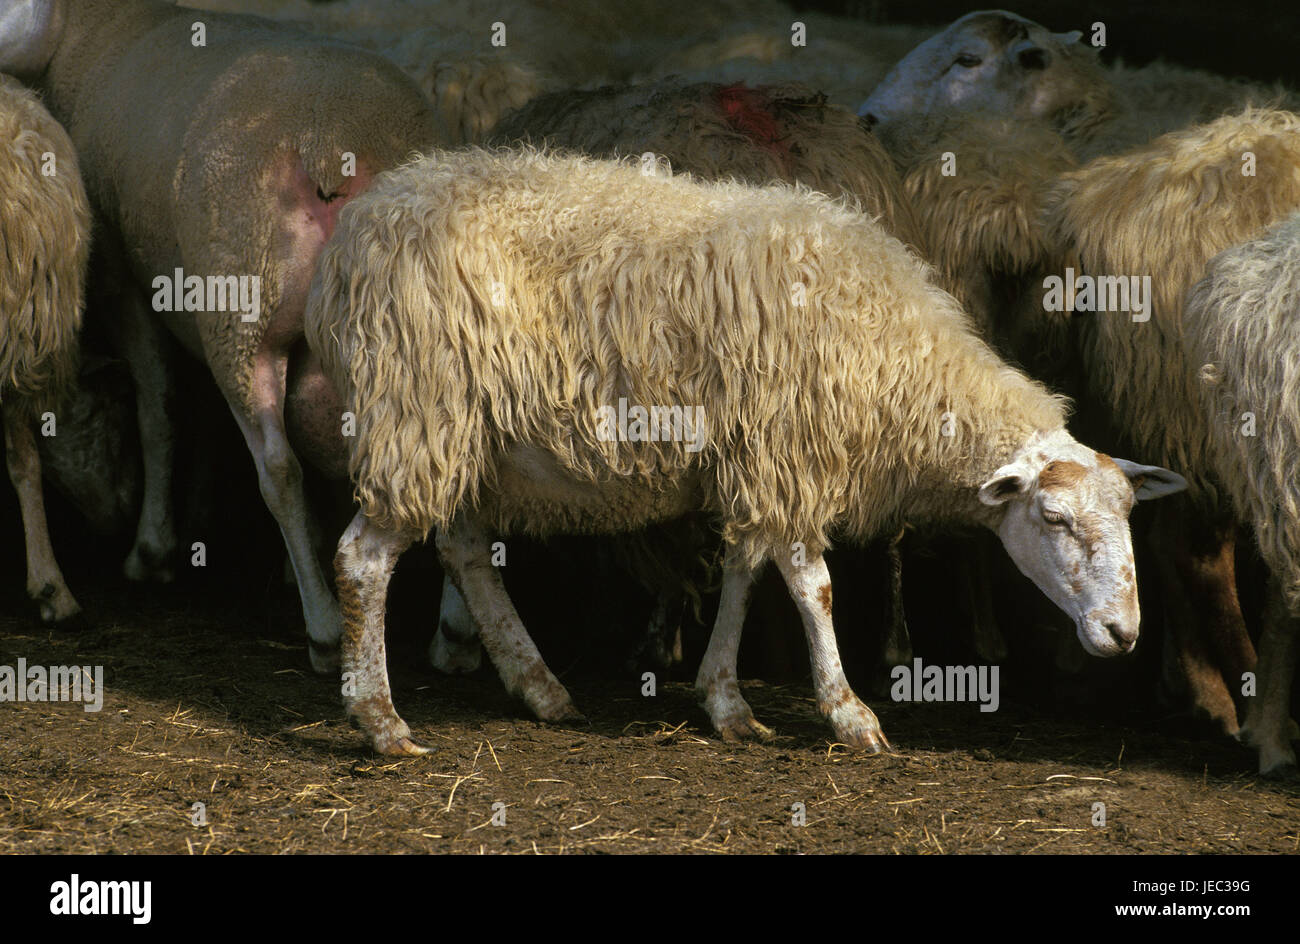 Sheep, Manech A Tete Rousse, red head-Manech, Stock Photo